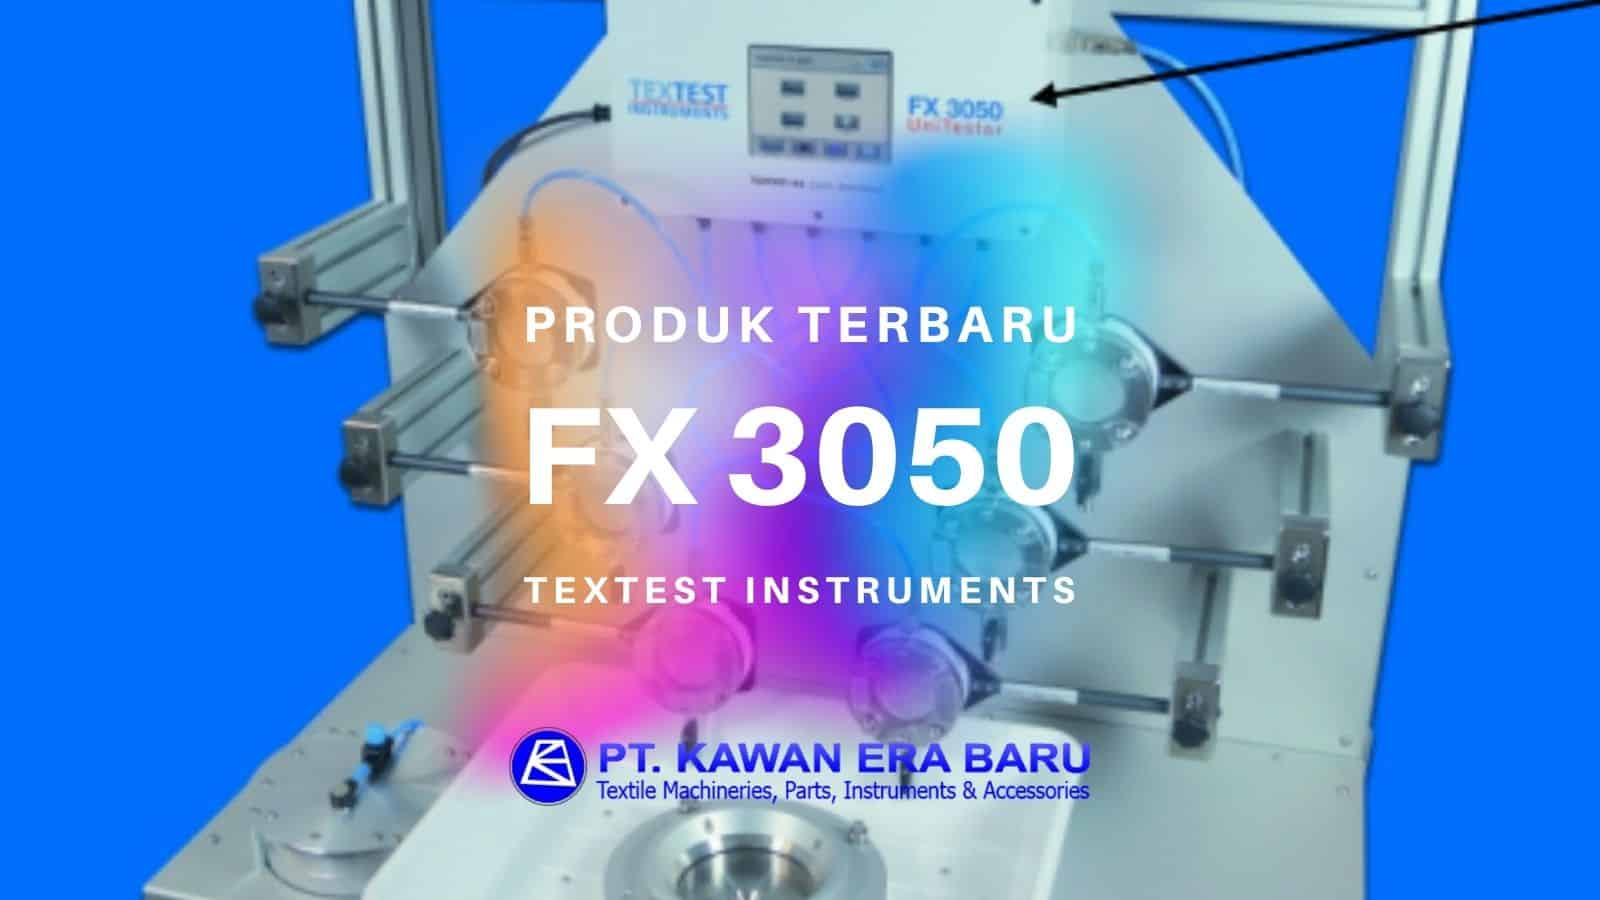 Produk Terbaru Textest Instruments: FX 3050